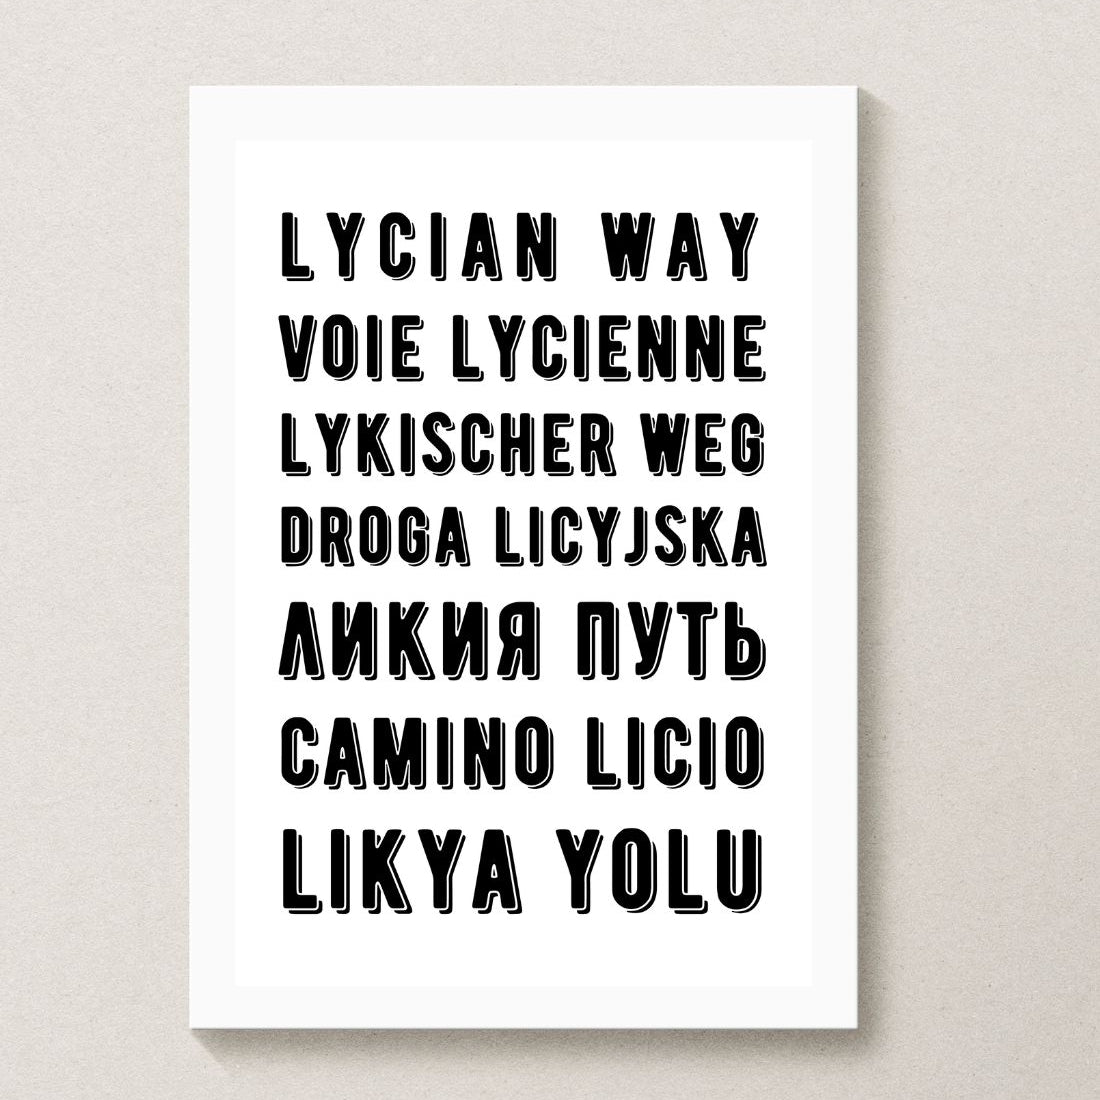 lycian way poster